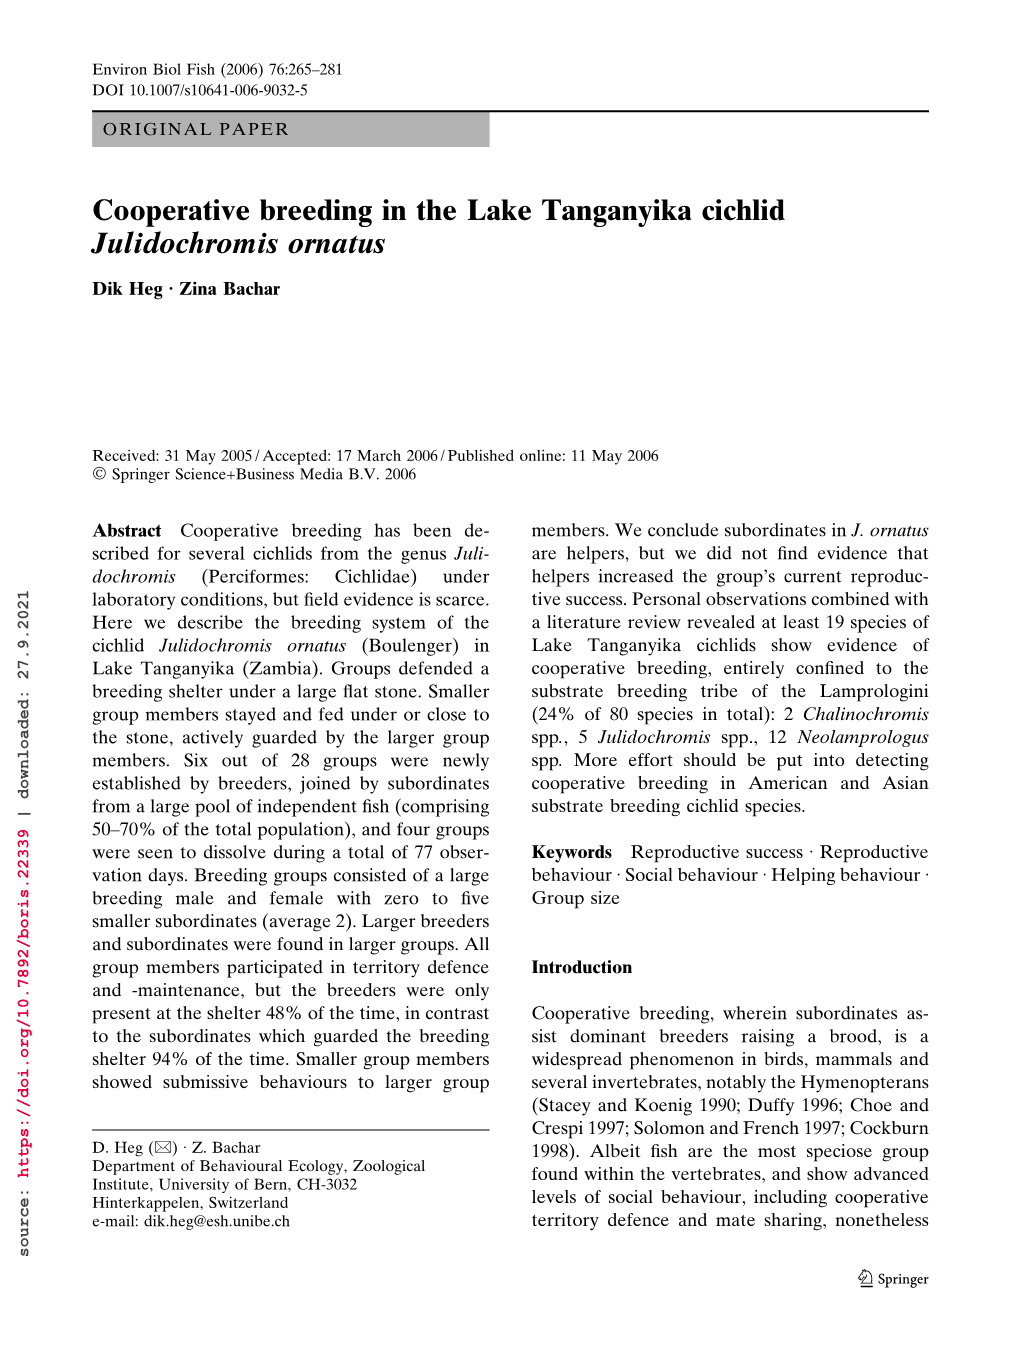 Cooperative Breeding in the Lake Tanganyika Cichlid Julidochromis